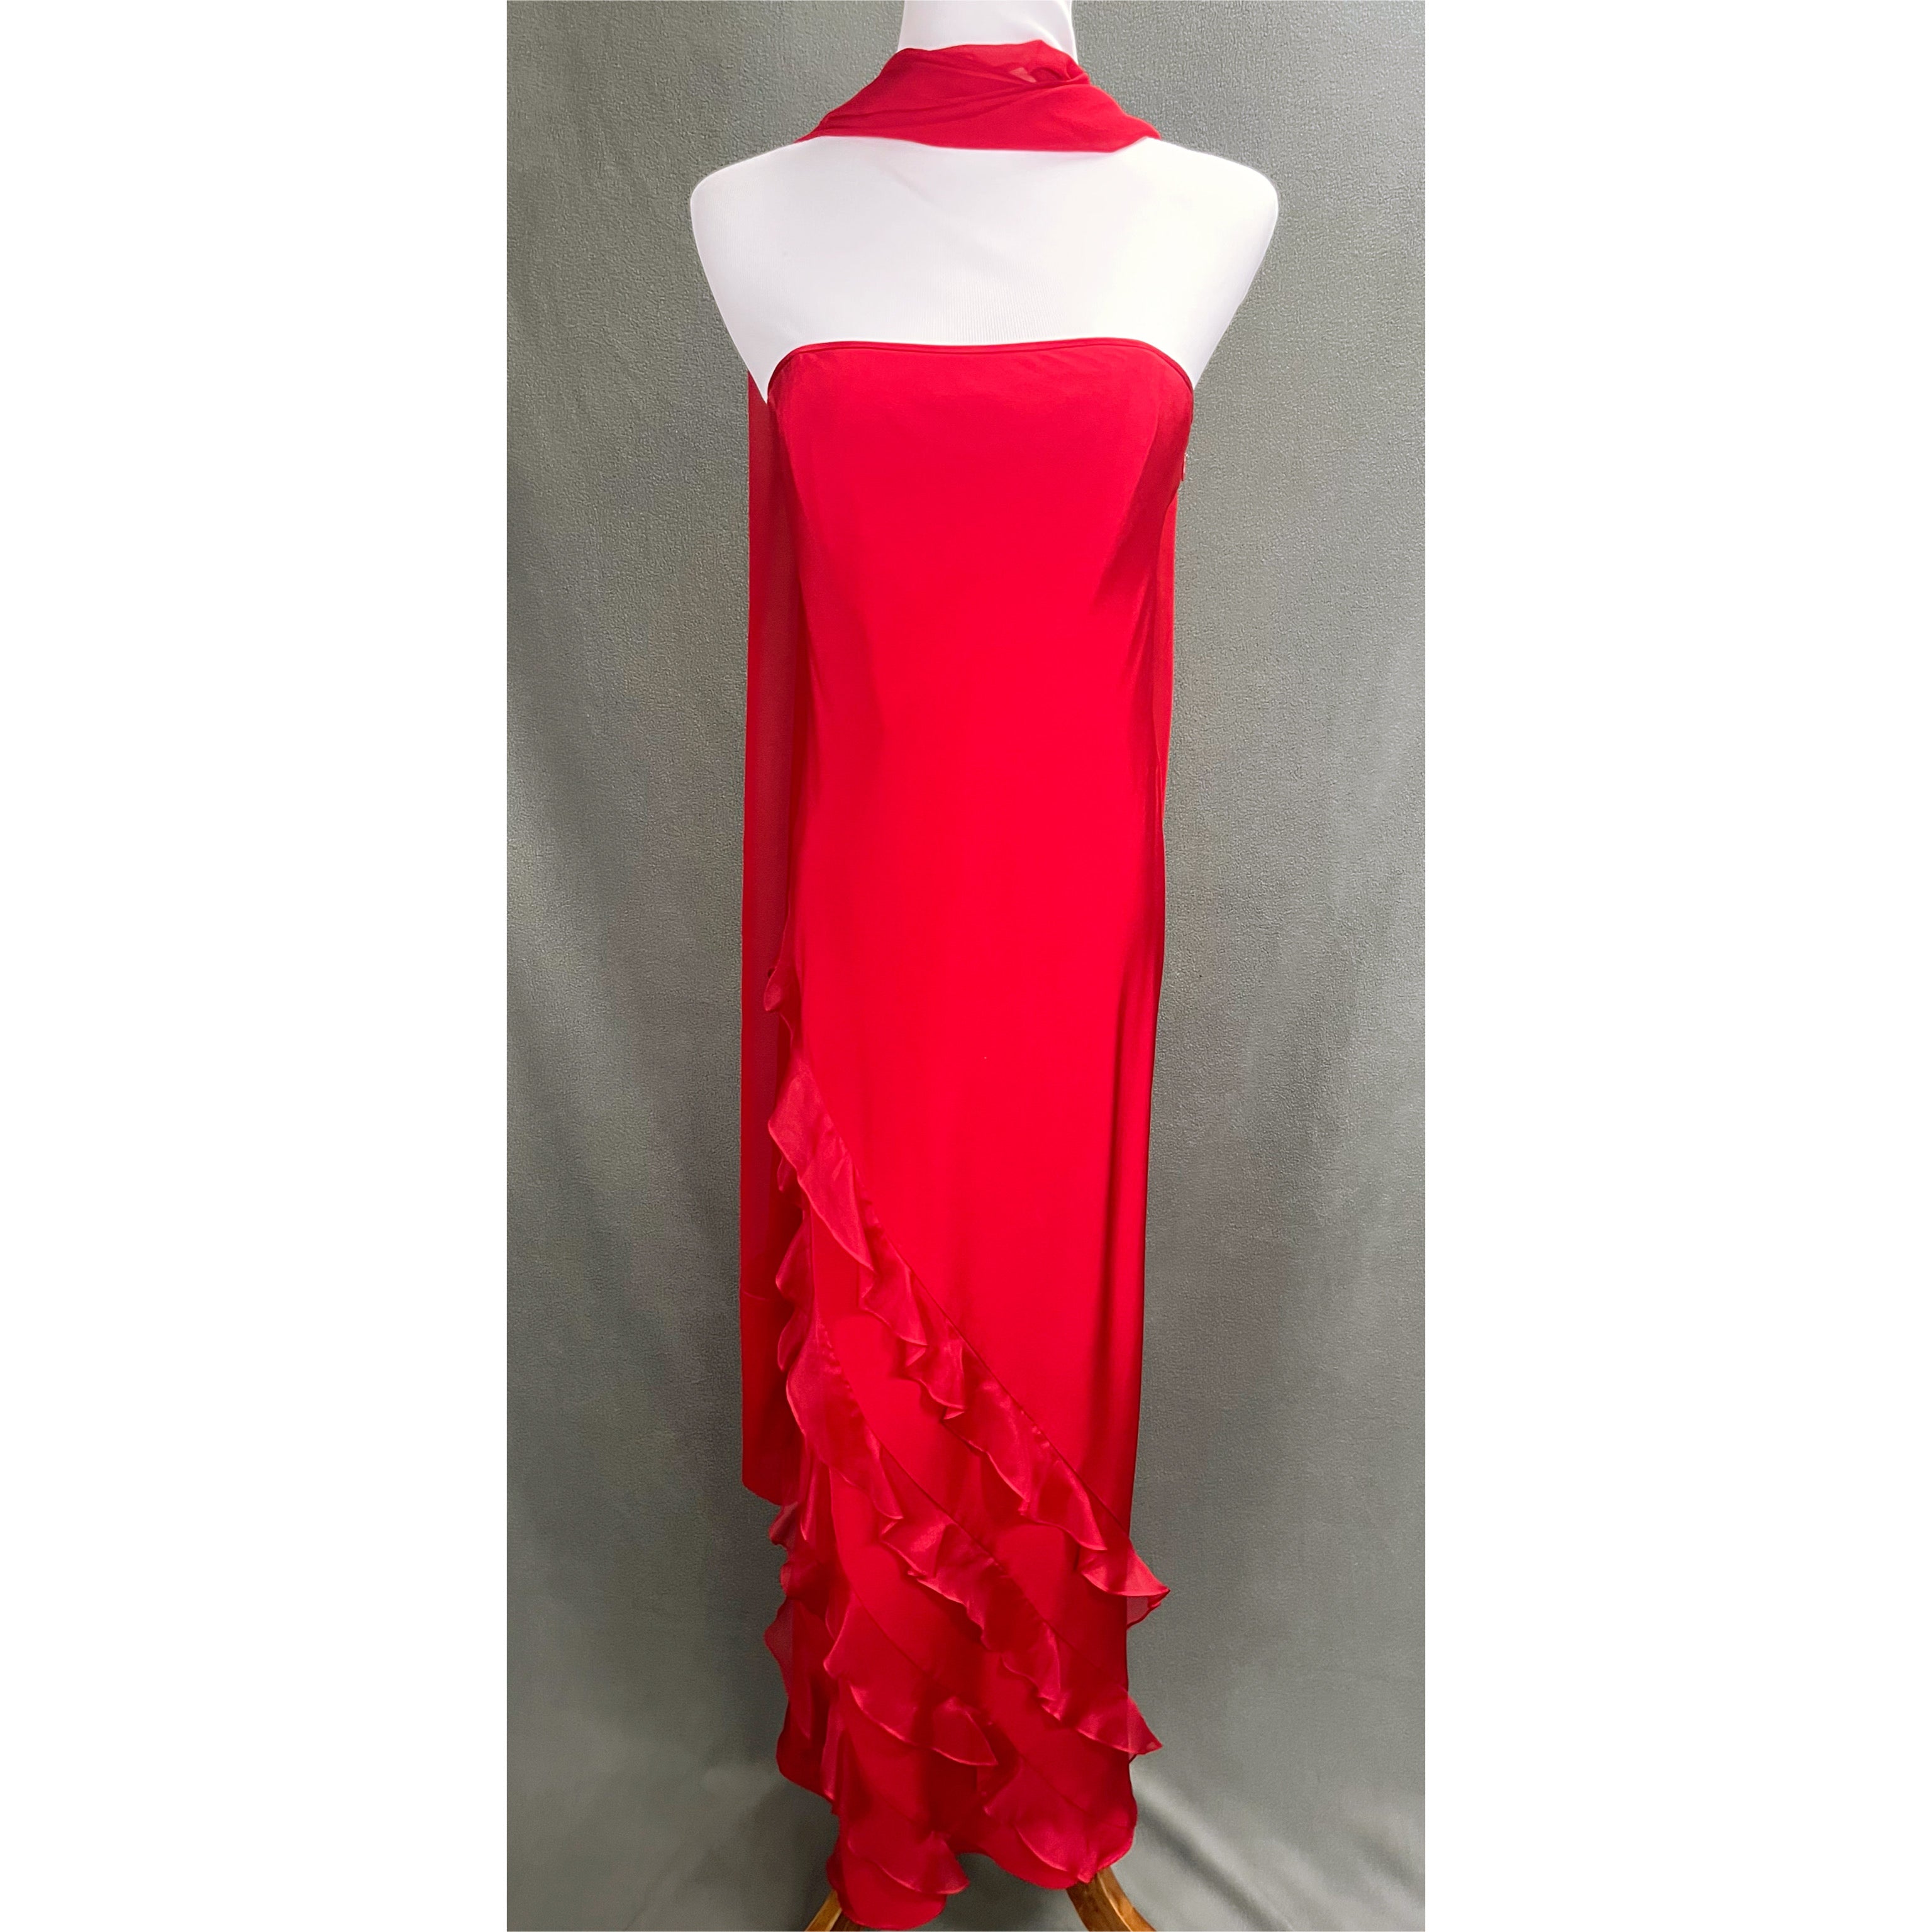 Tom & Linda Platt red dress, size 6